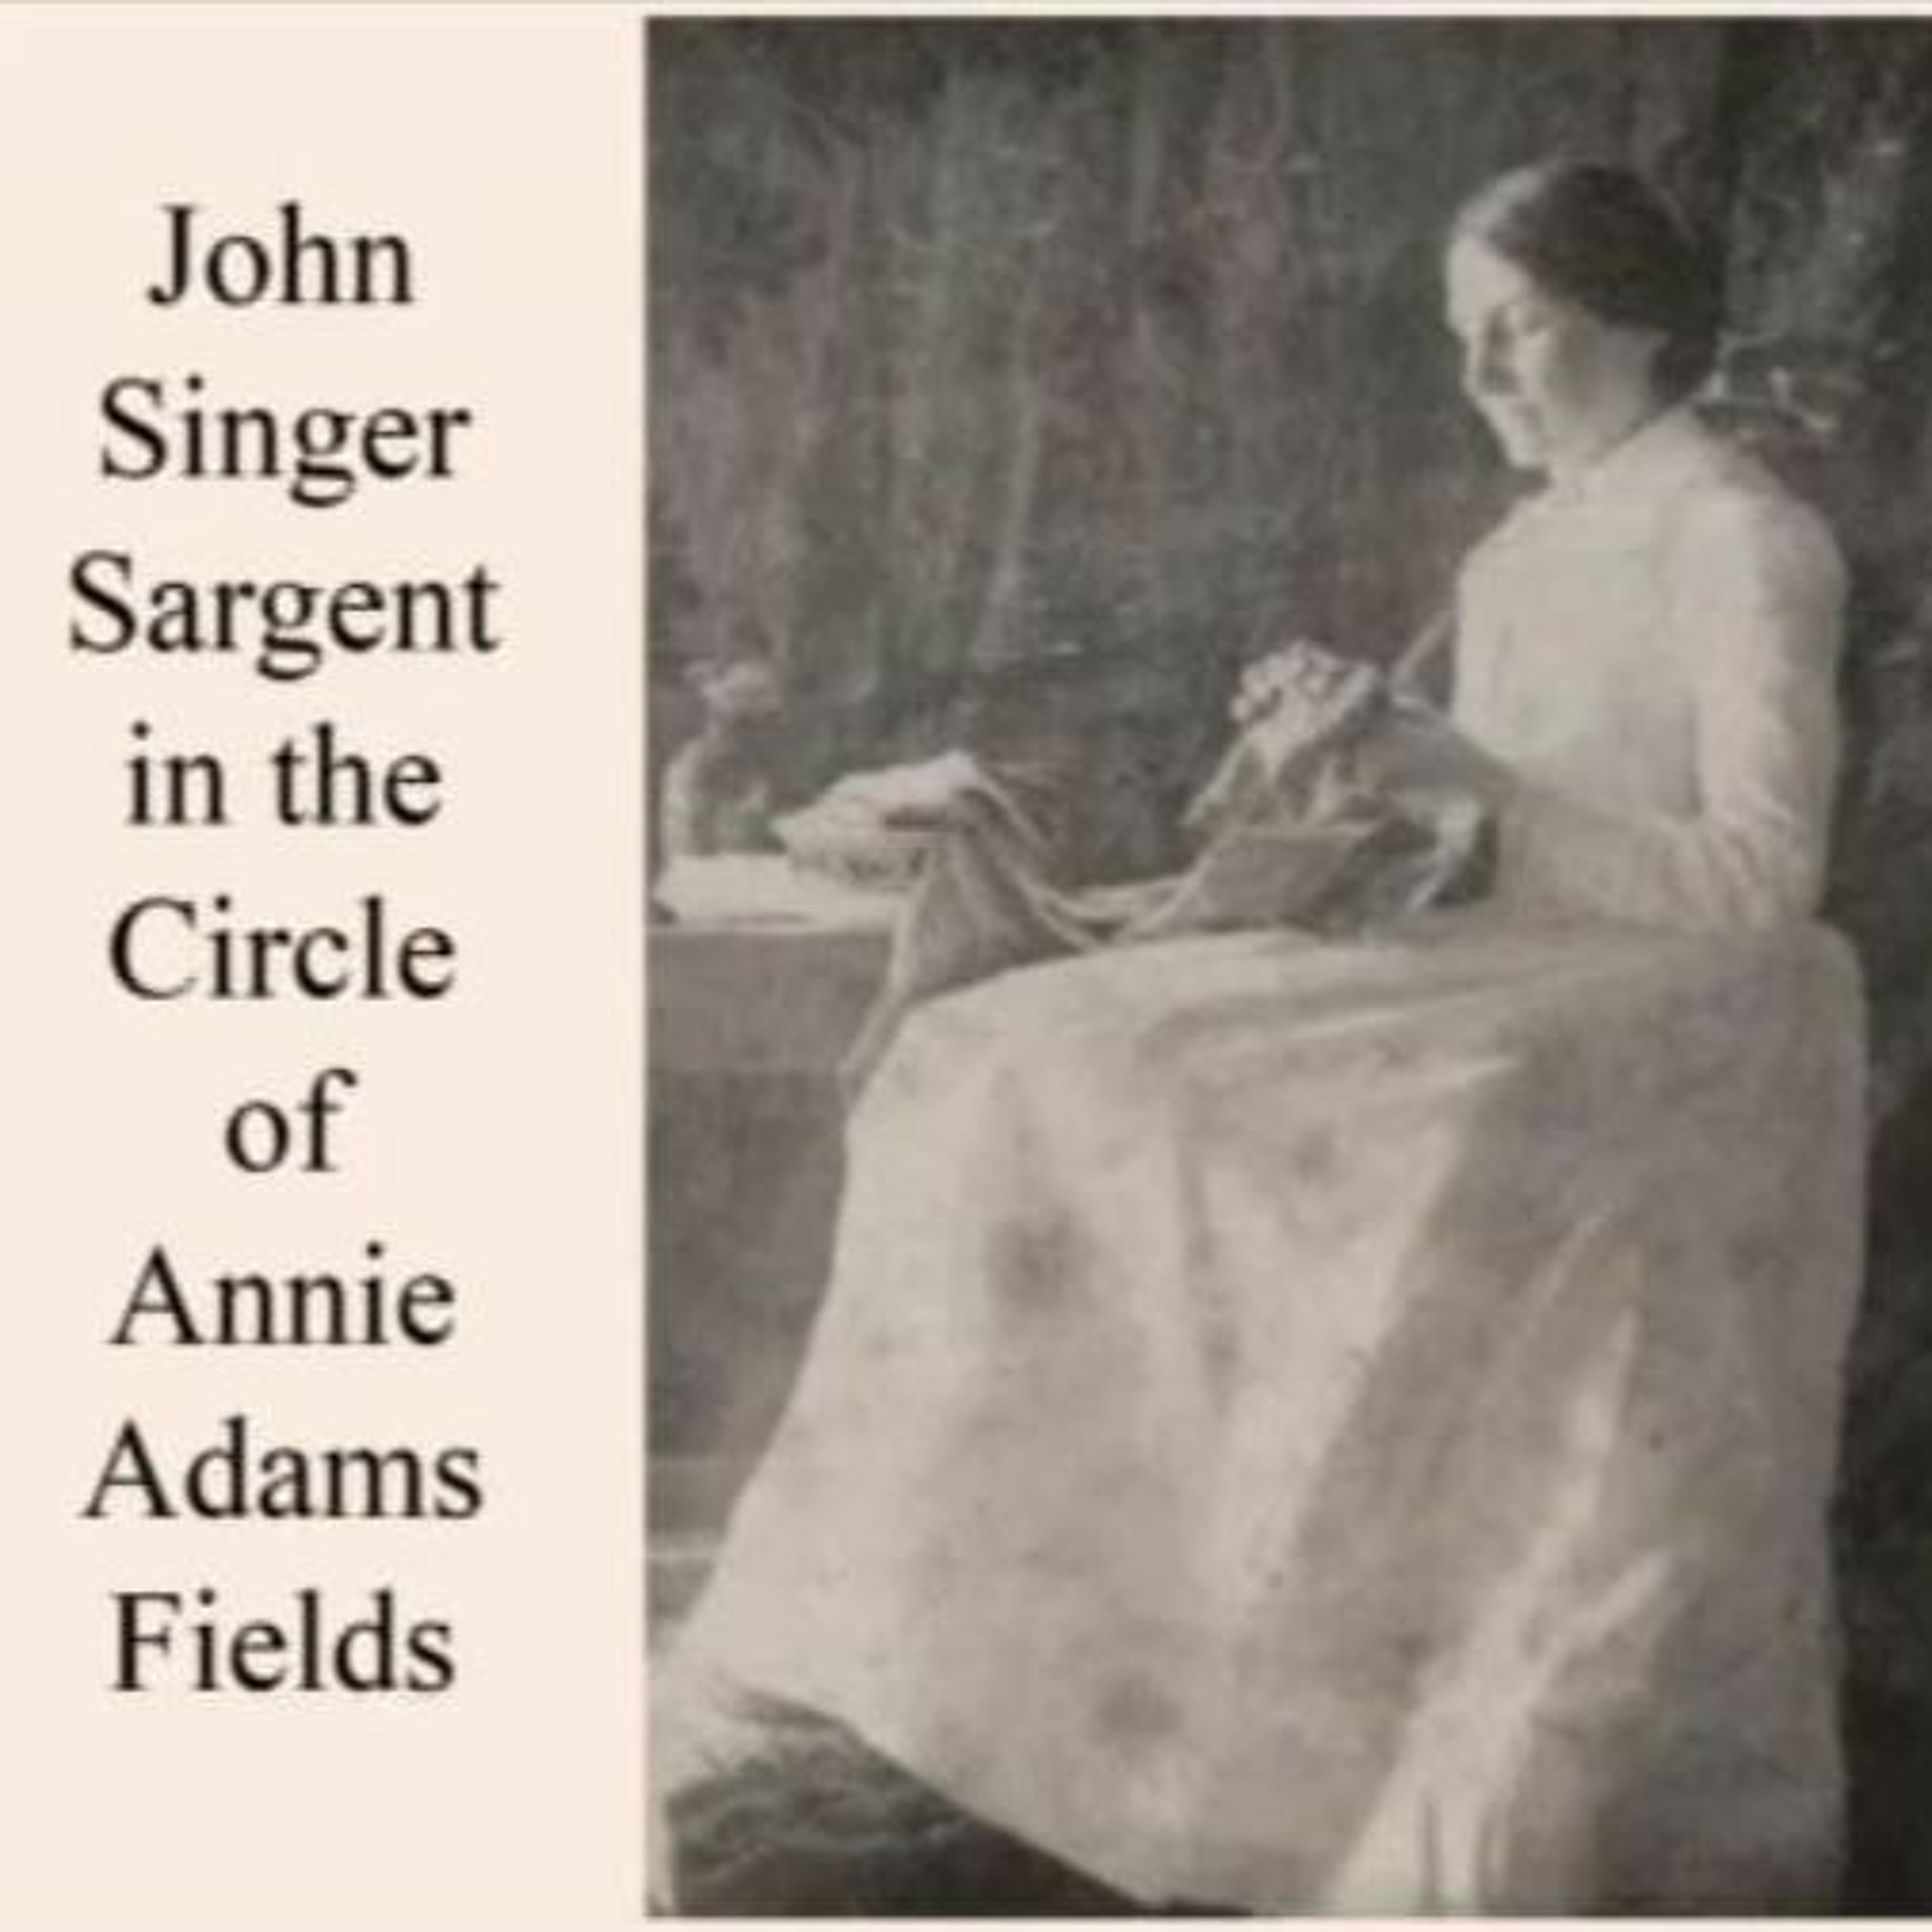 Karen Corsano and Daniel Williman, “John Singer Sargent in the Circle of Annie Adams Fields”